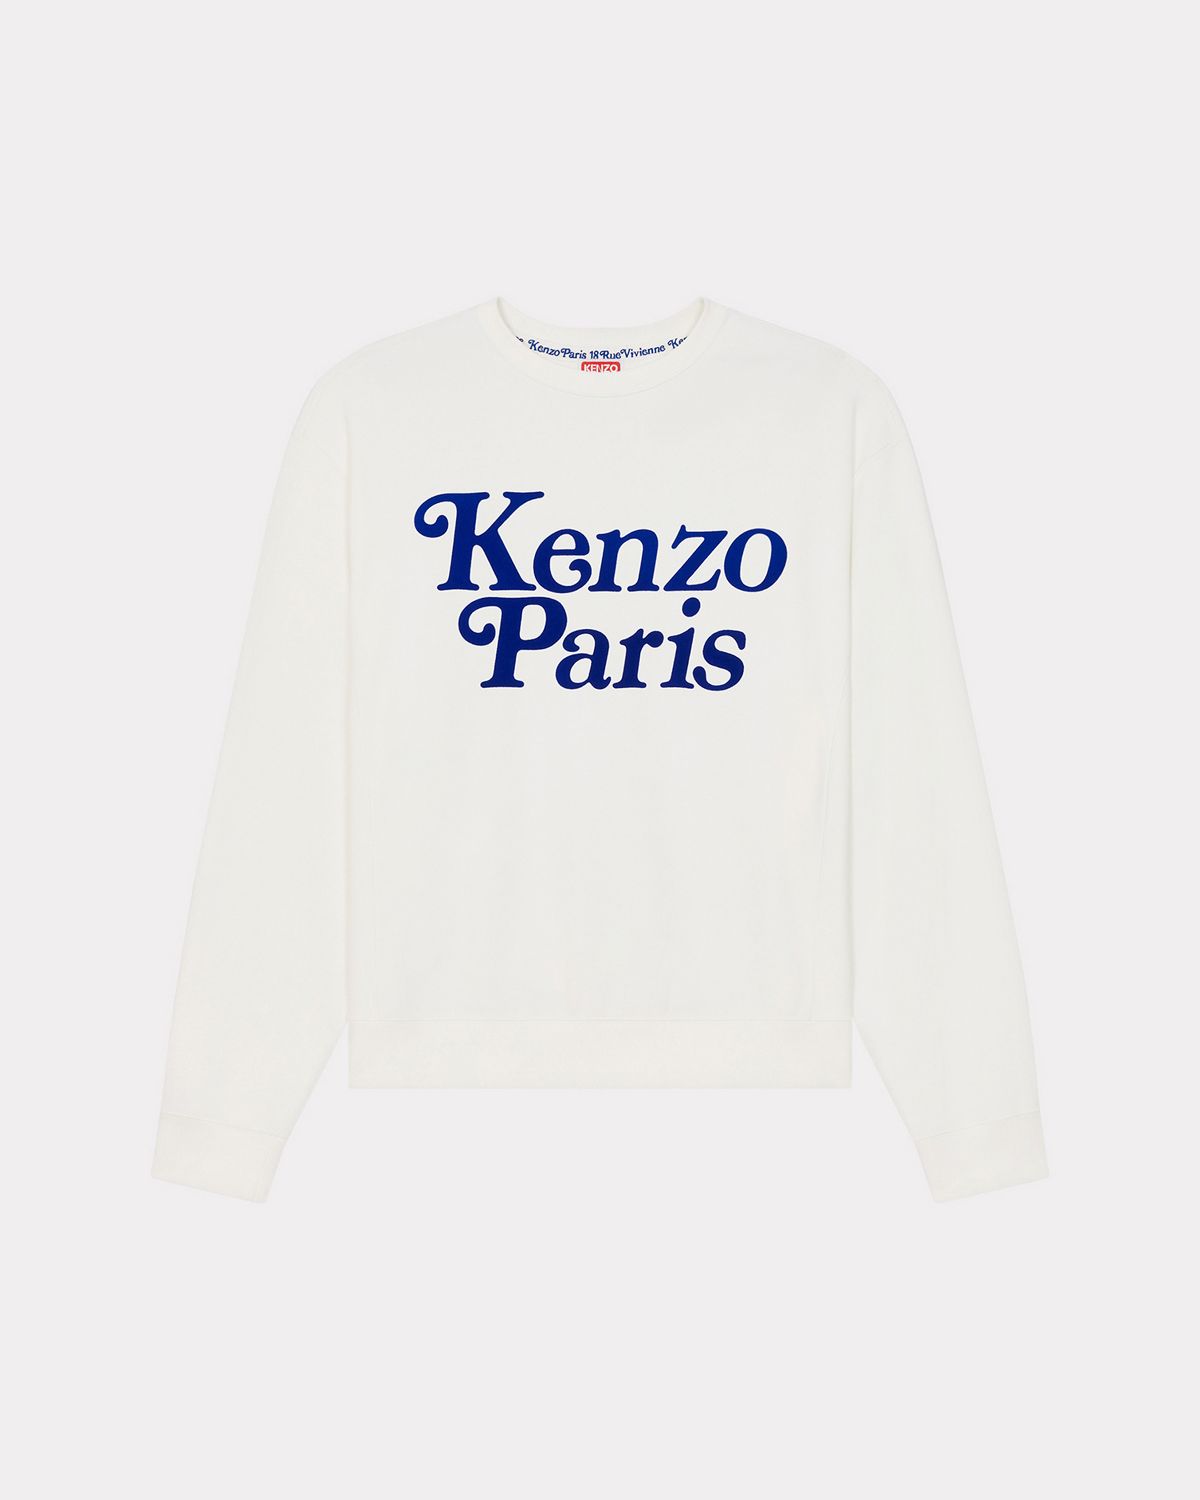 KENZO - 【残りわずか】【限定】 KENZO x VERDY / KENZO BY ...